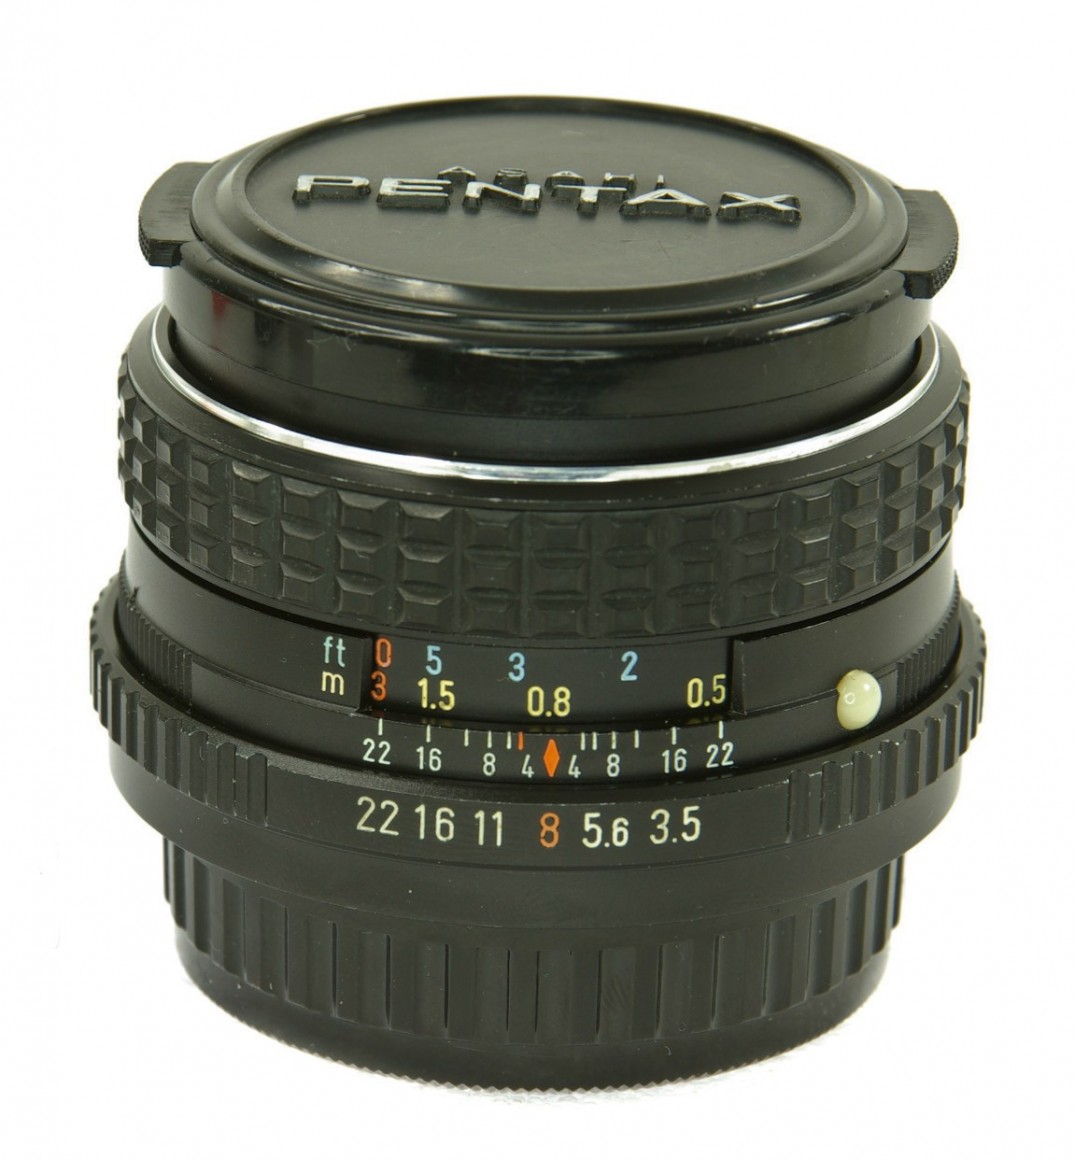 smc Pentax-M 28mm F/3.5